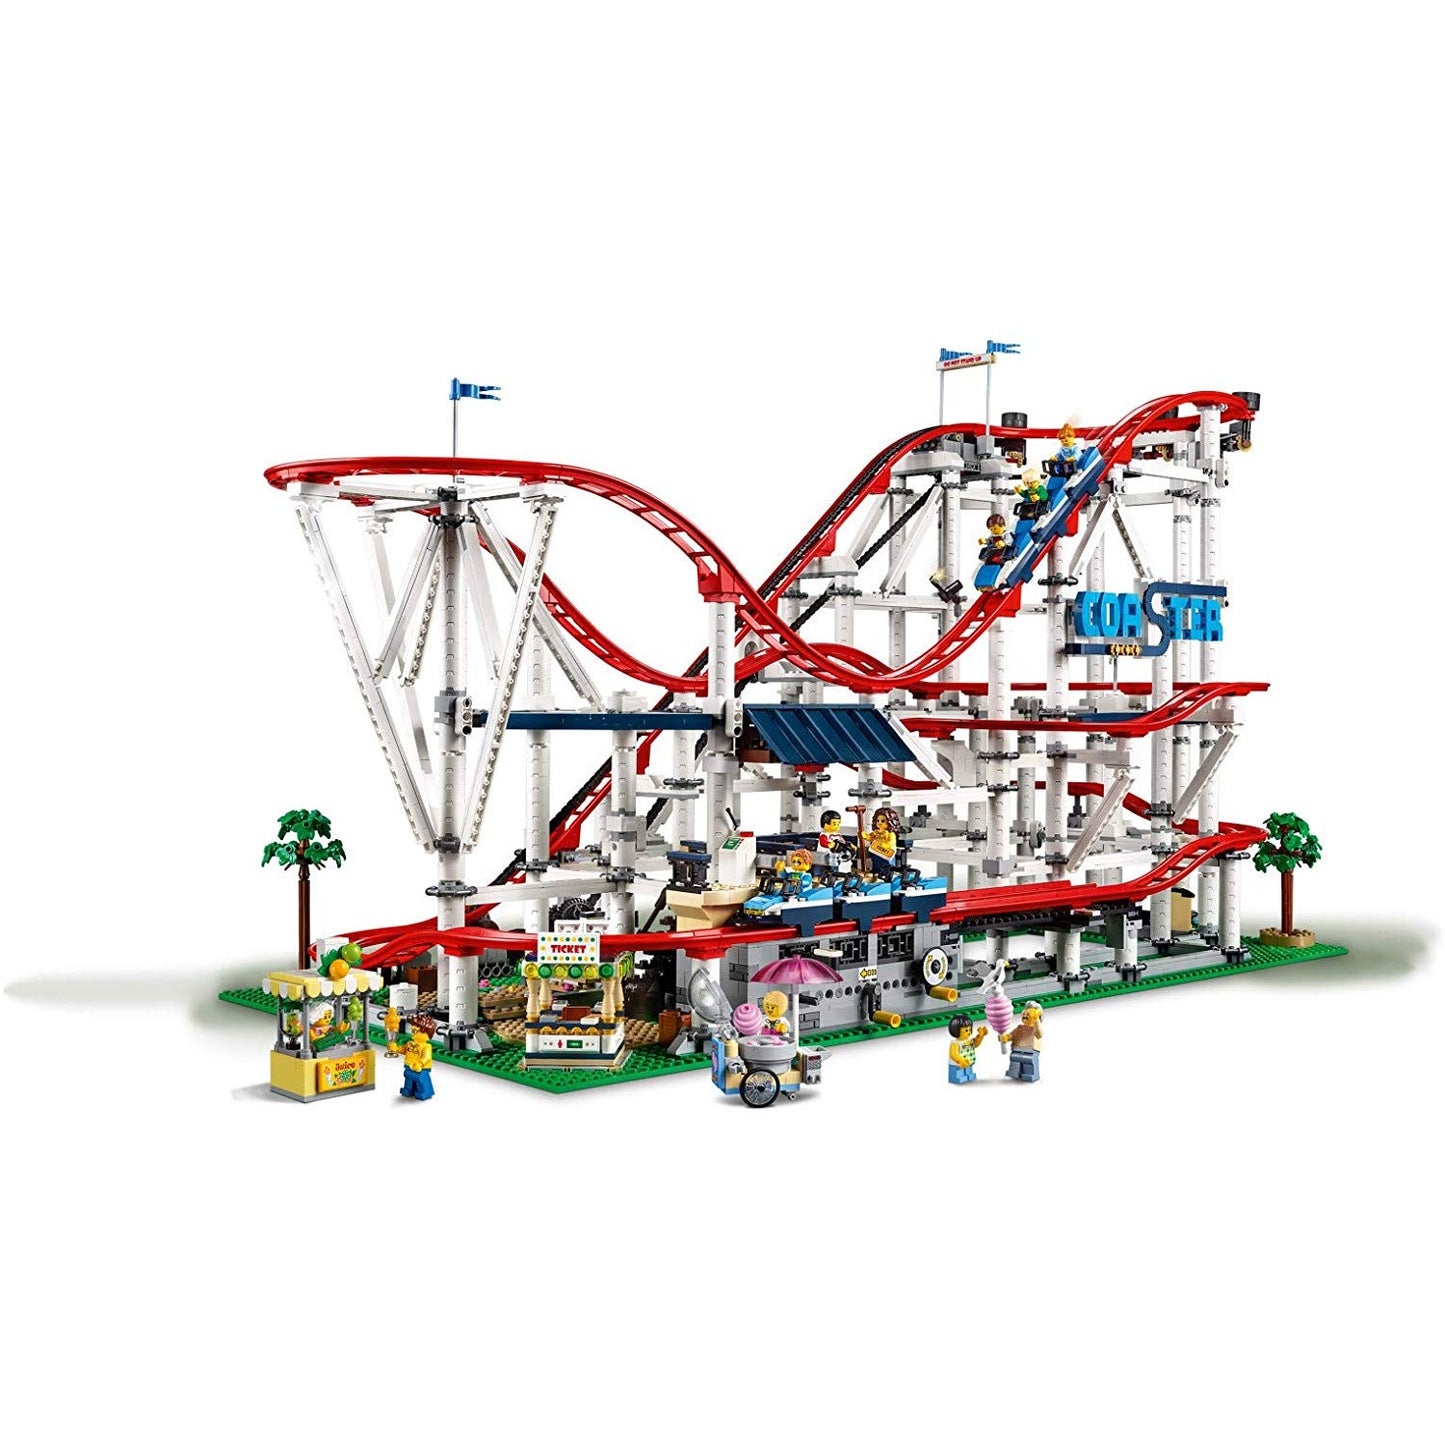 Lego Roller Coaster - oddgifts.com